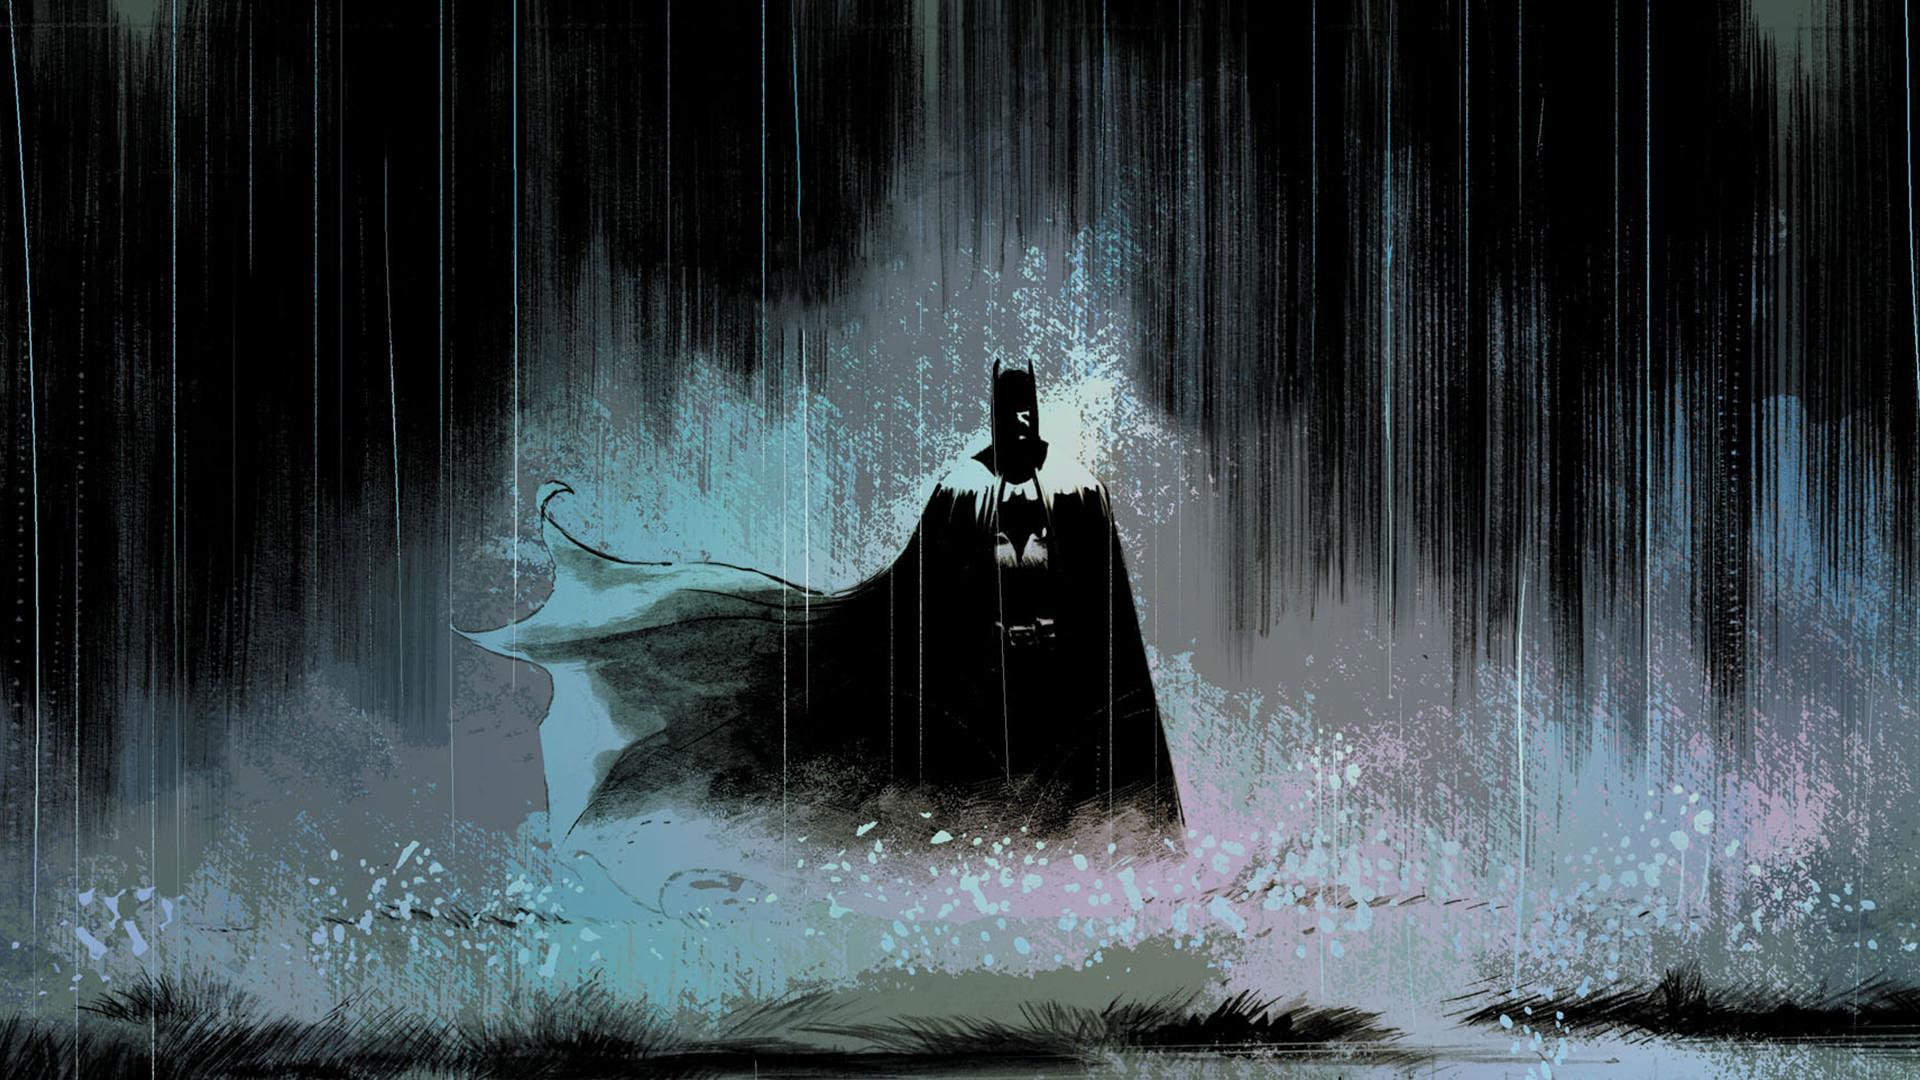 Batman HD Wallpaper and Background